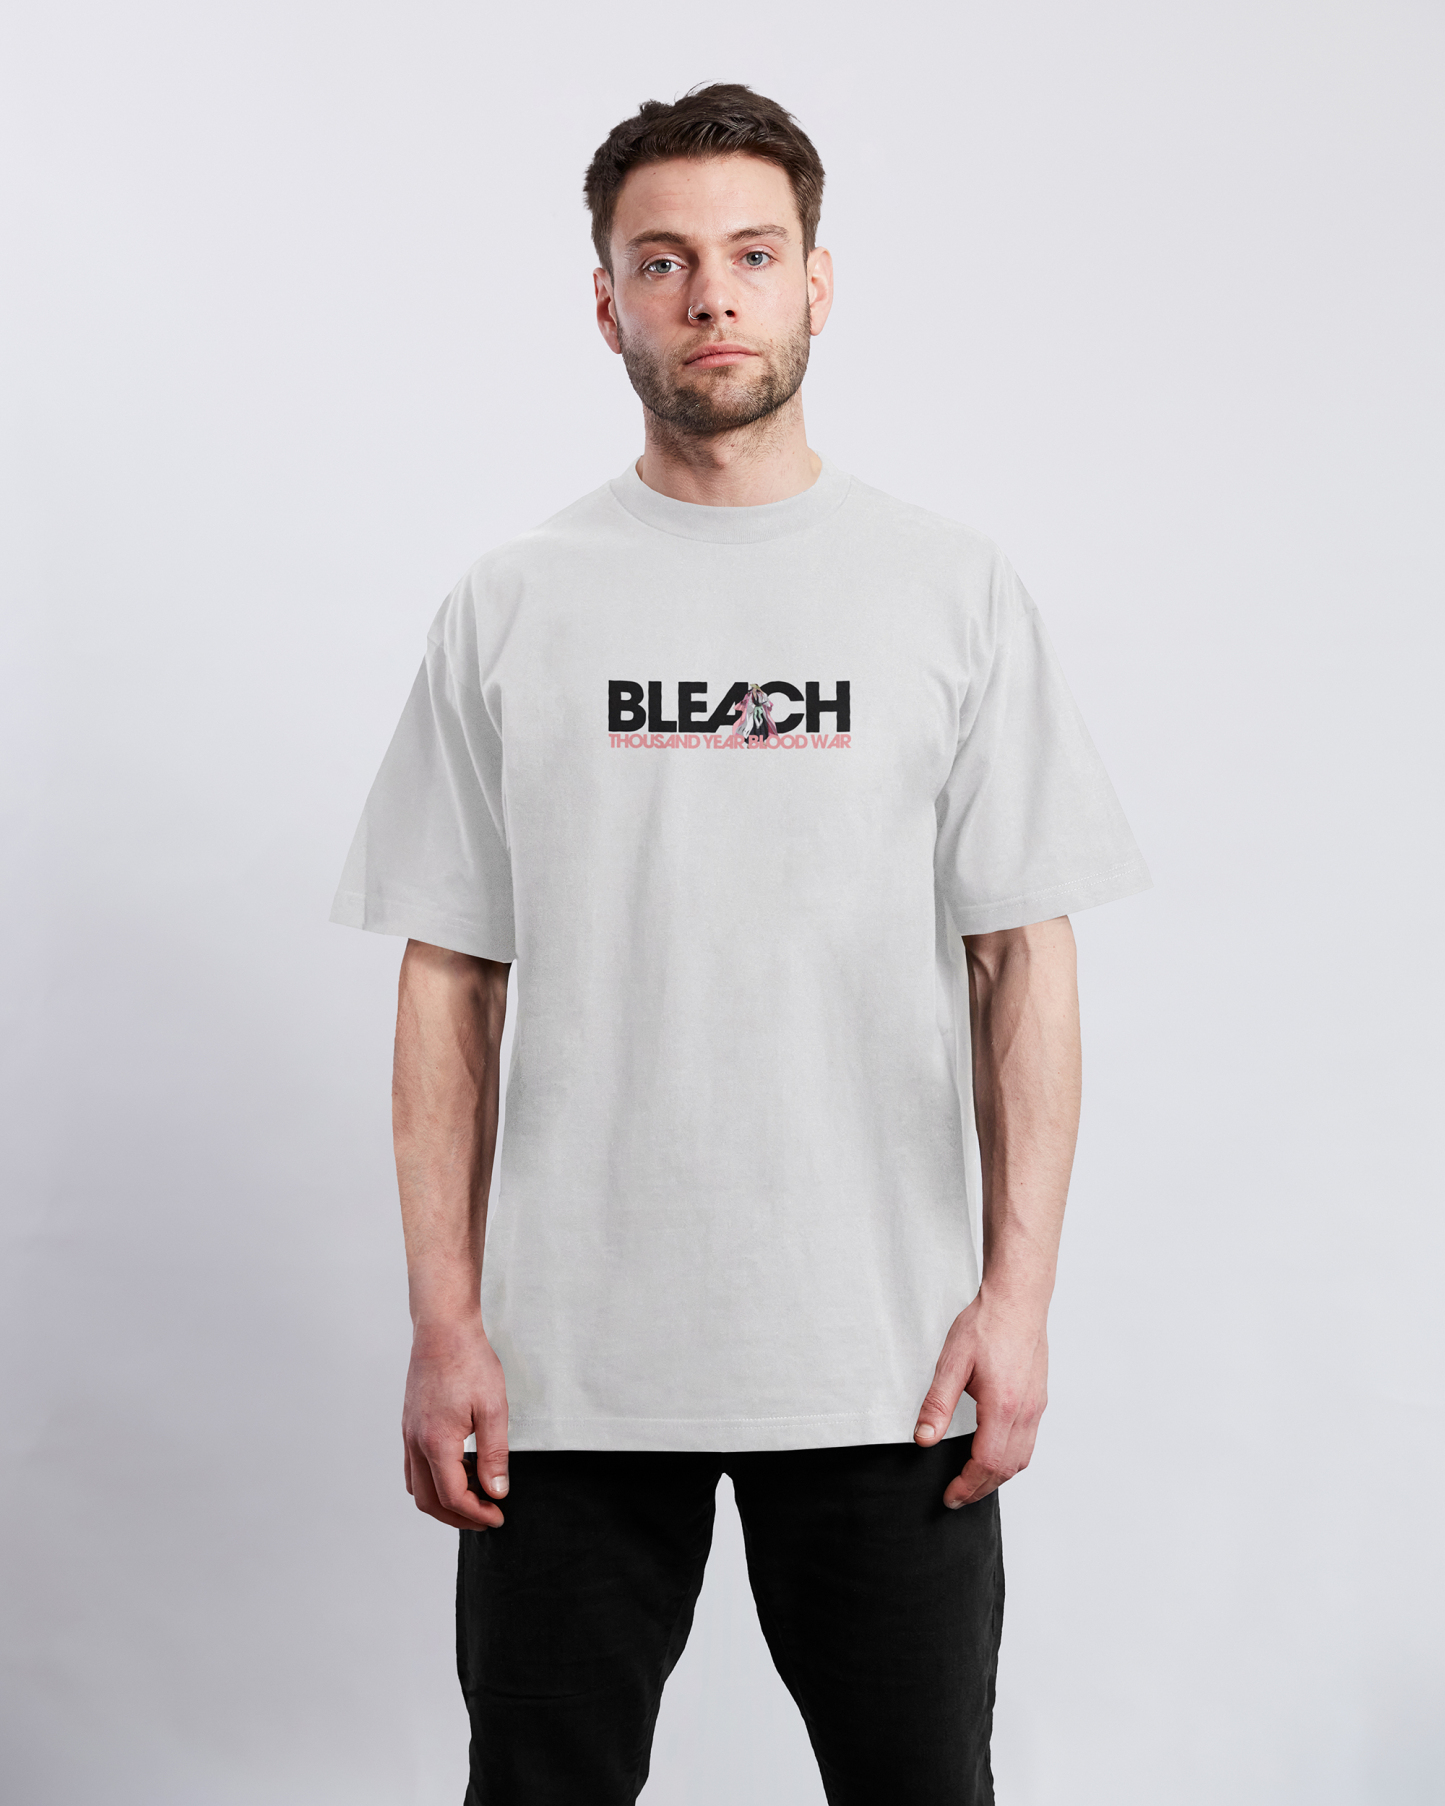 Shunsui Kyoraku Bleach | White T-Shirt TYBW